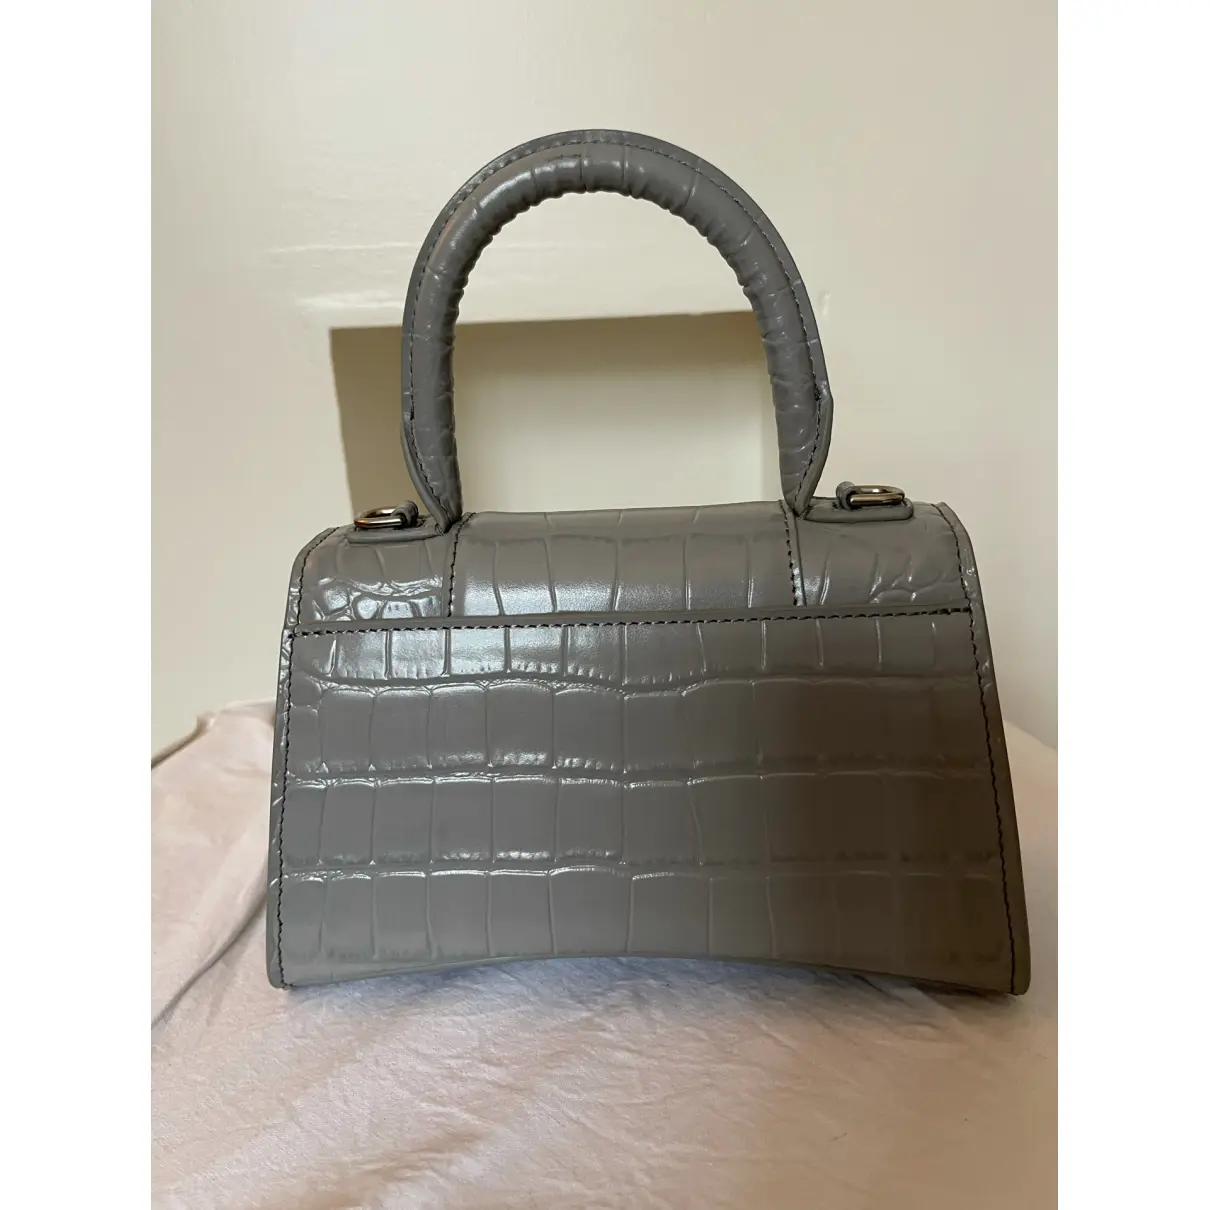 Buy Balenciaga Hourglass leather handbag online